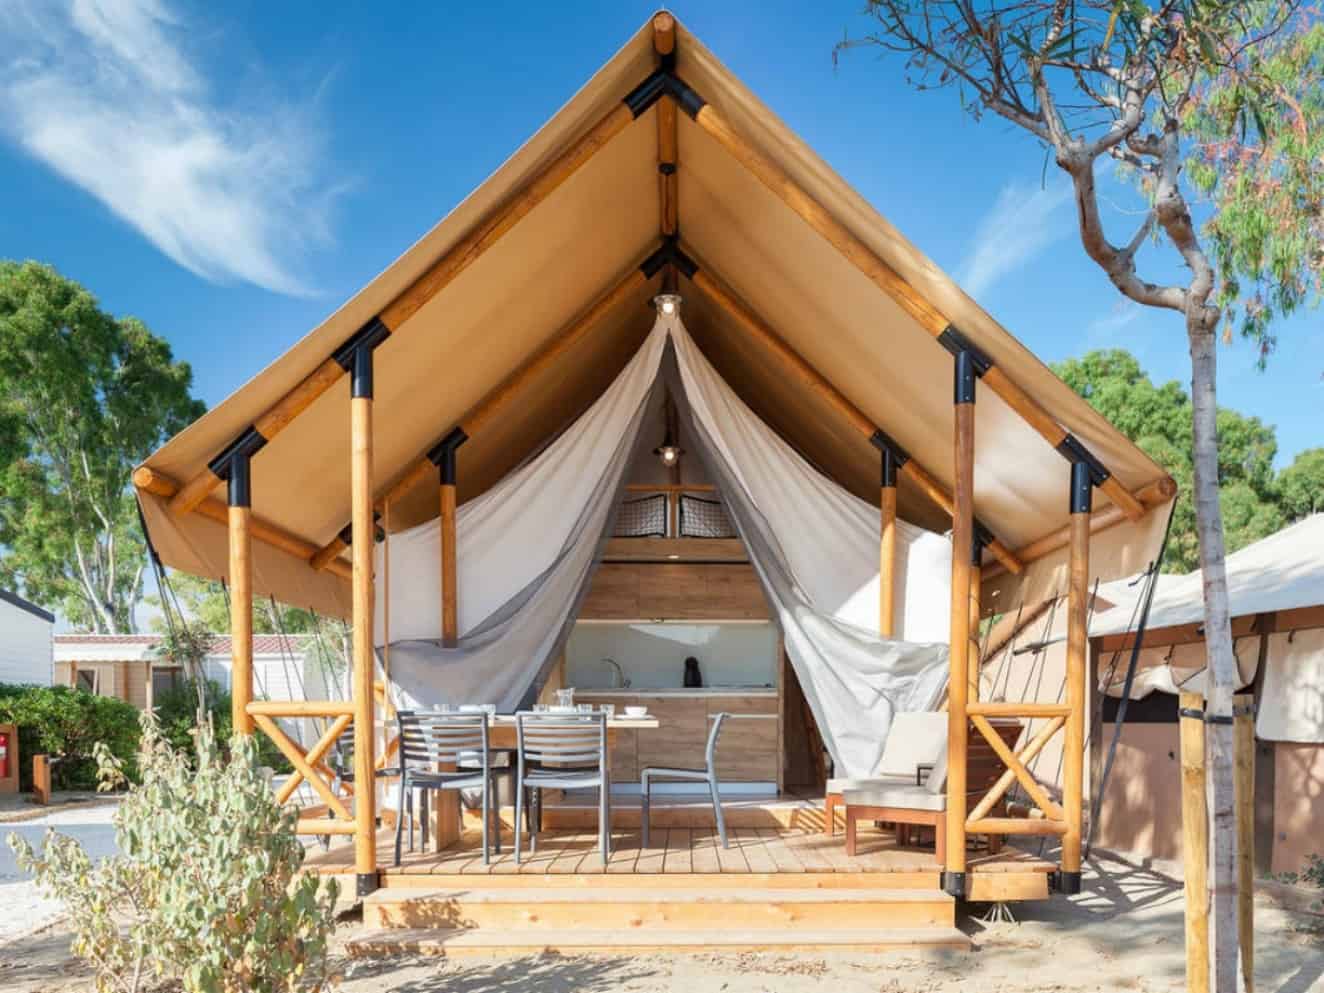 Tent Safari Lodge at Yelloh! Village